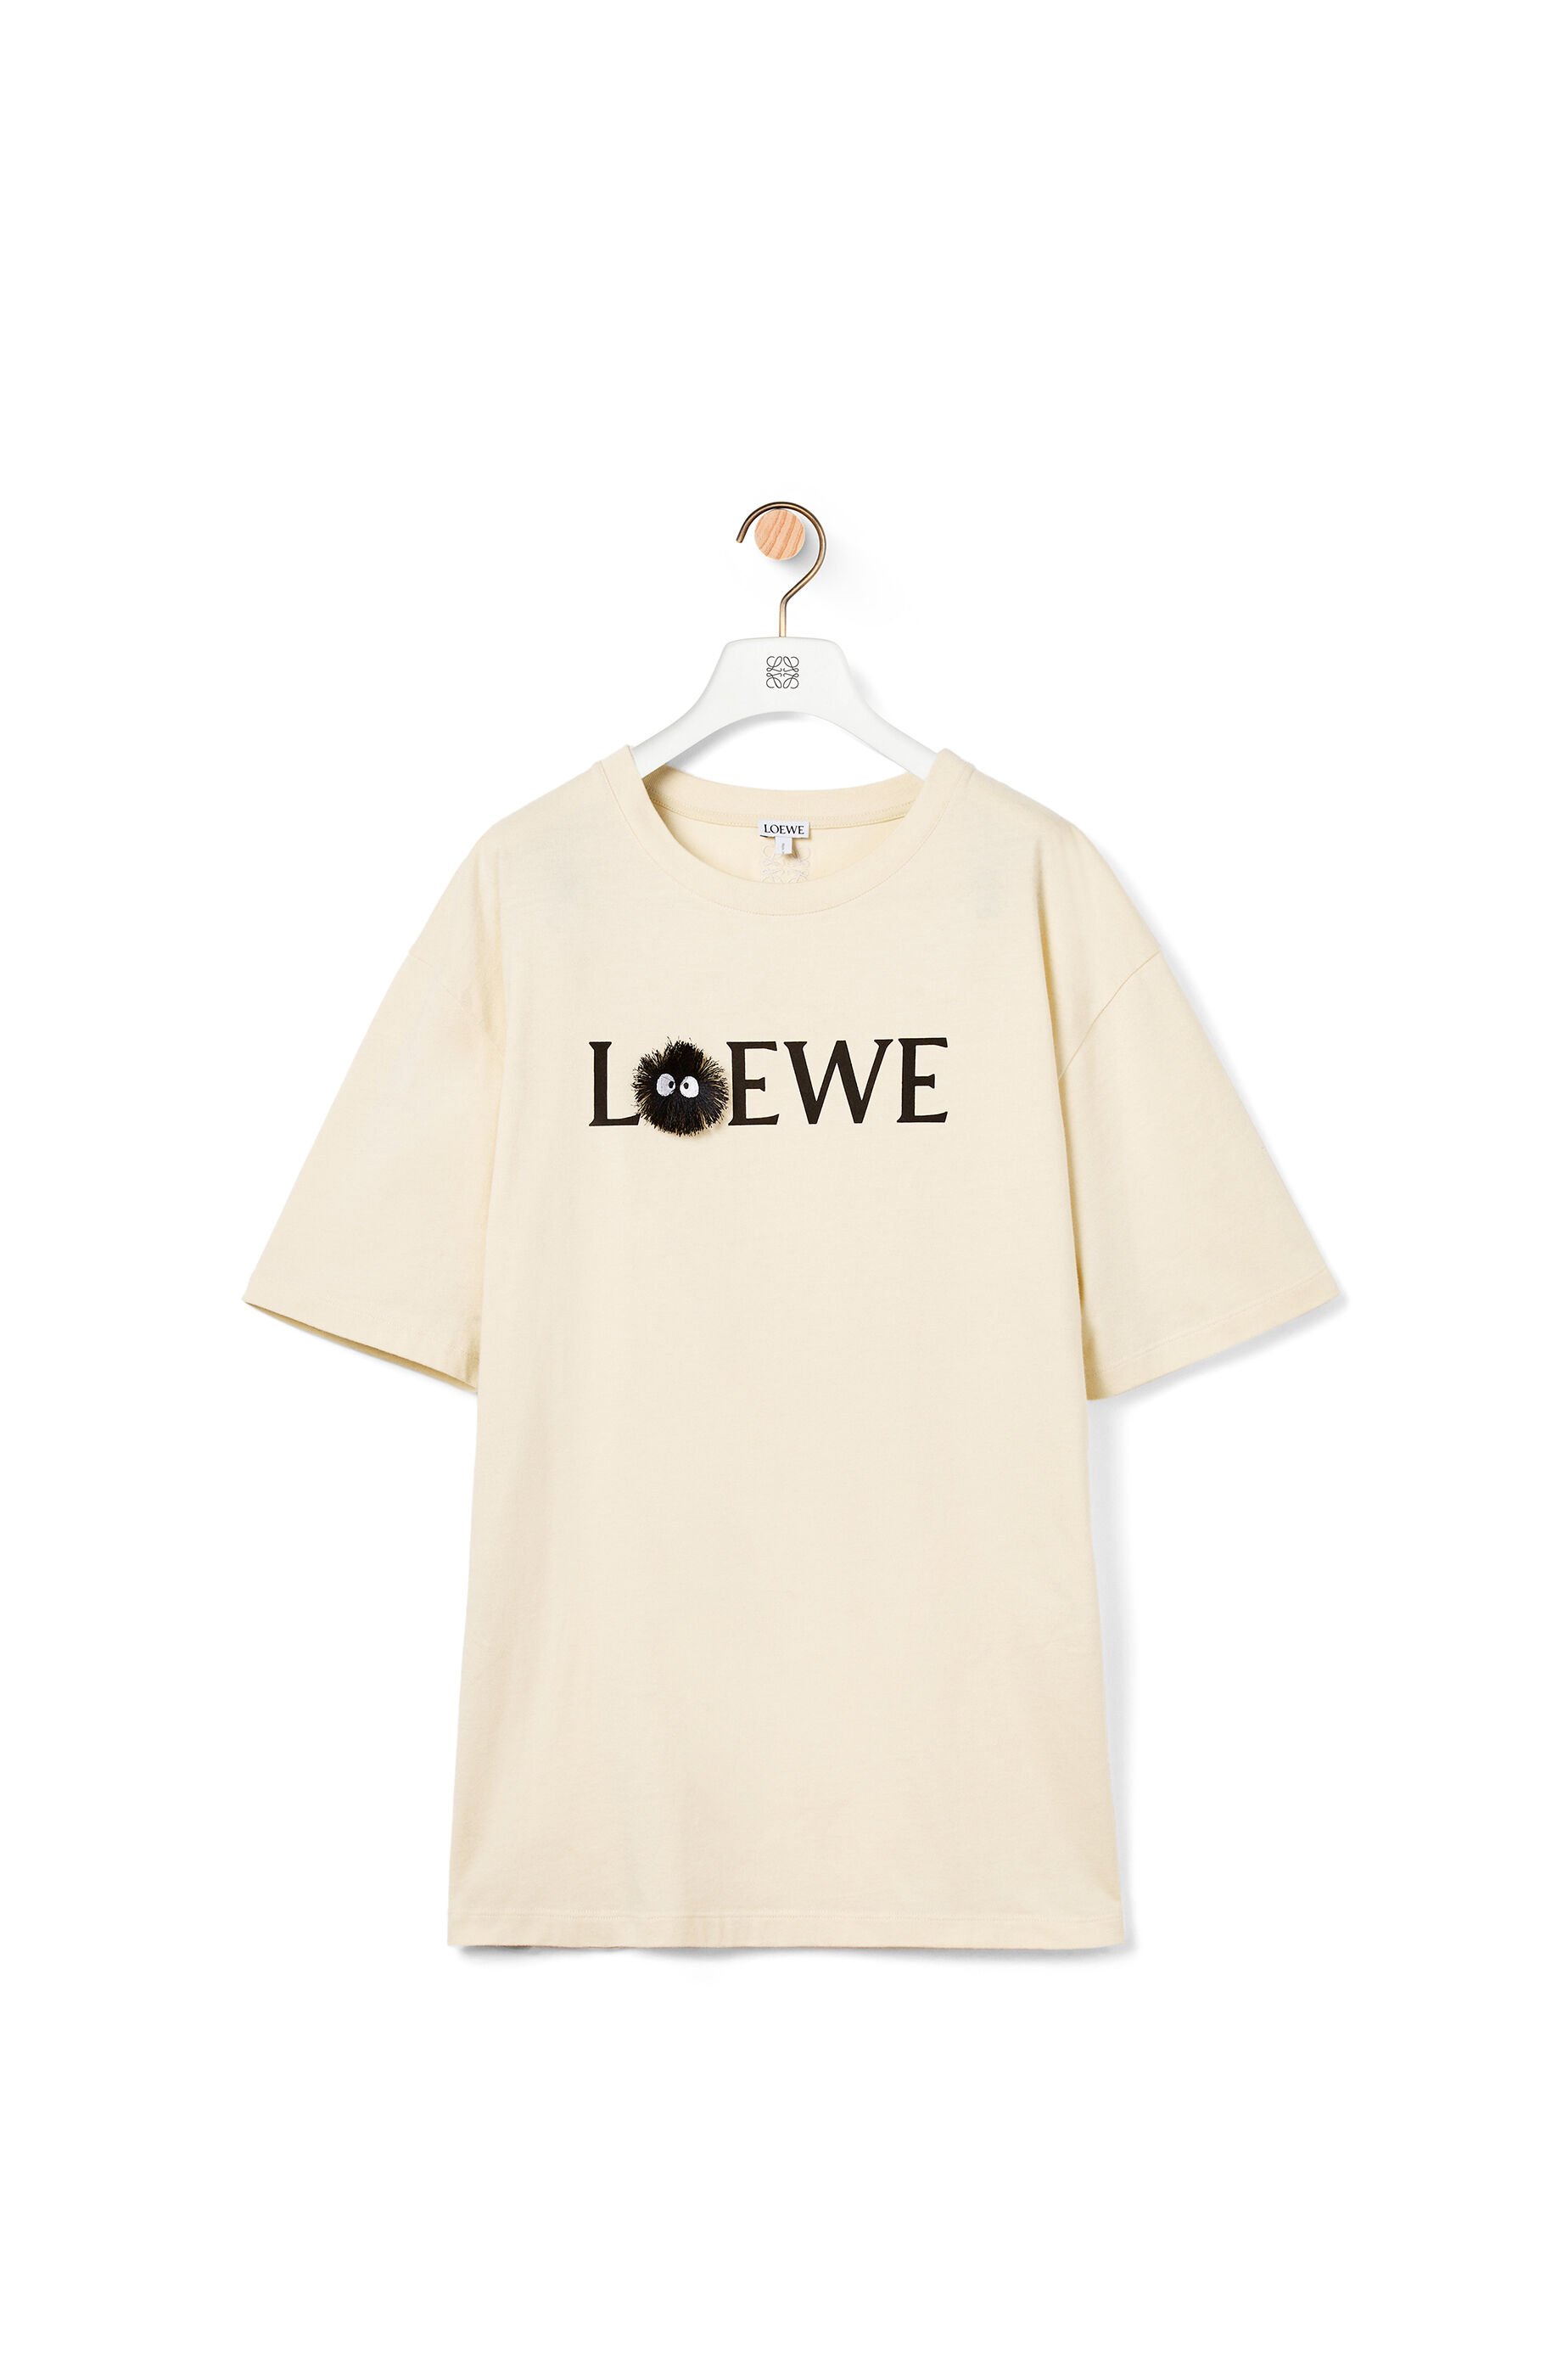 loewe shirts